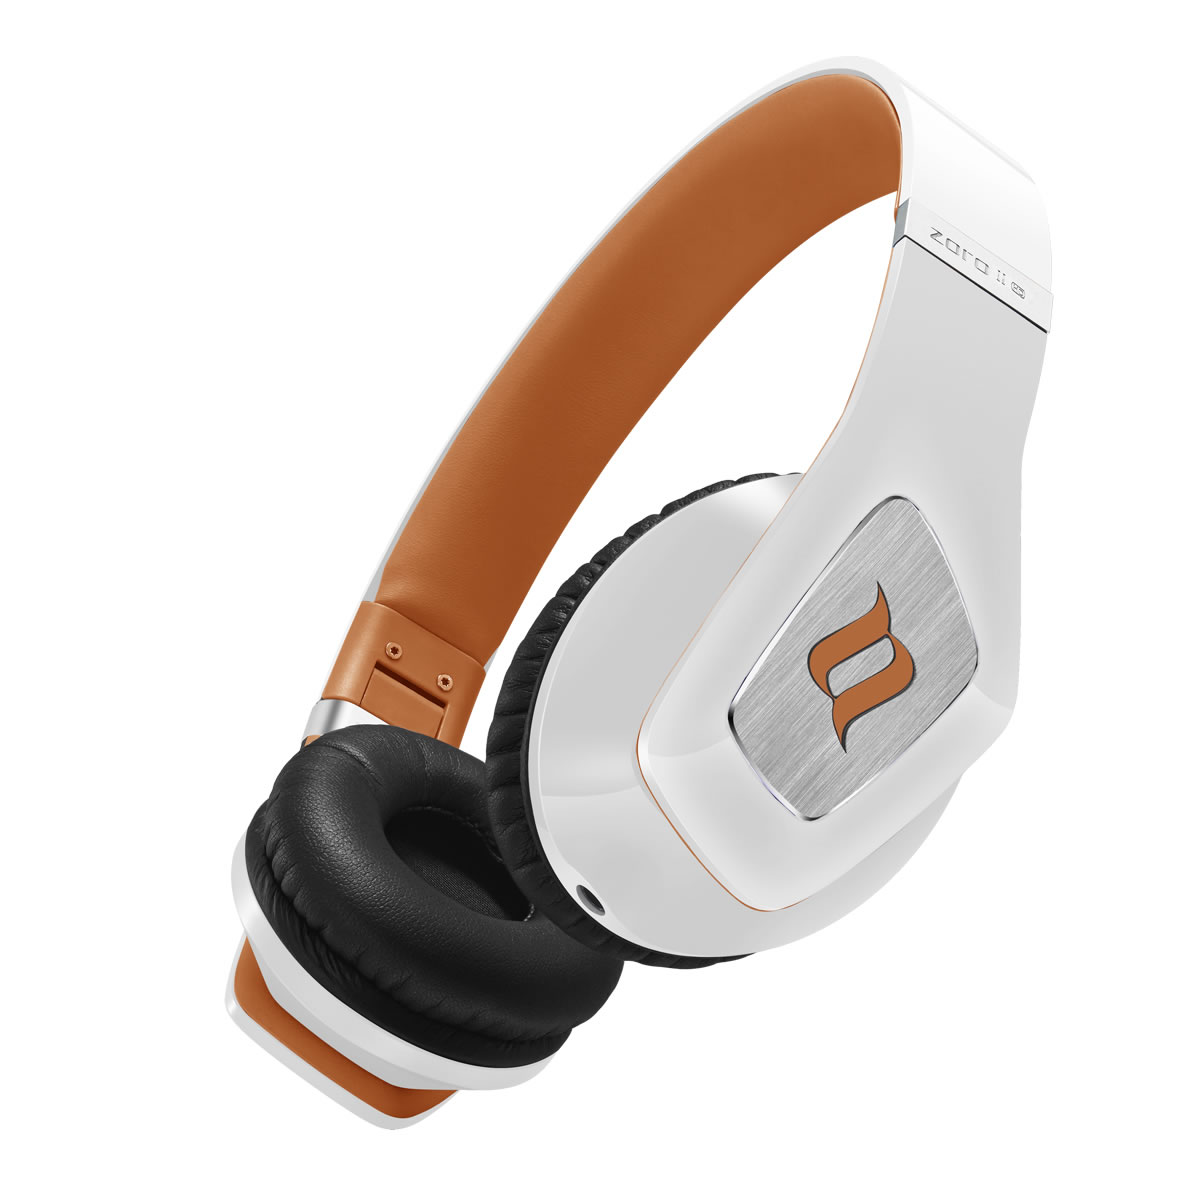 Noontec MF3122(B) Zoro HD II On-Ear-Kopfhörer weiß/orange